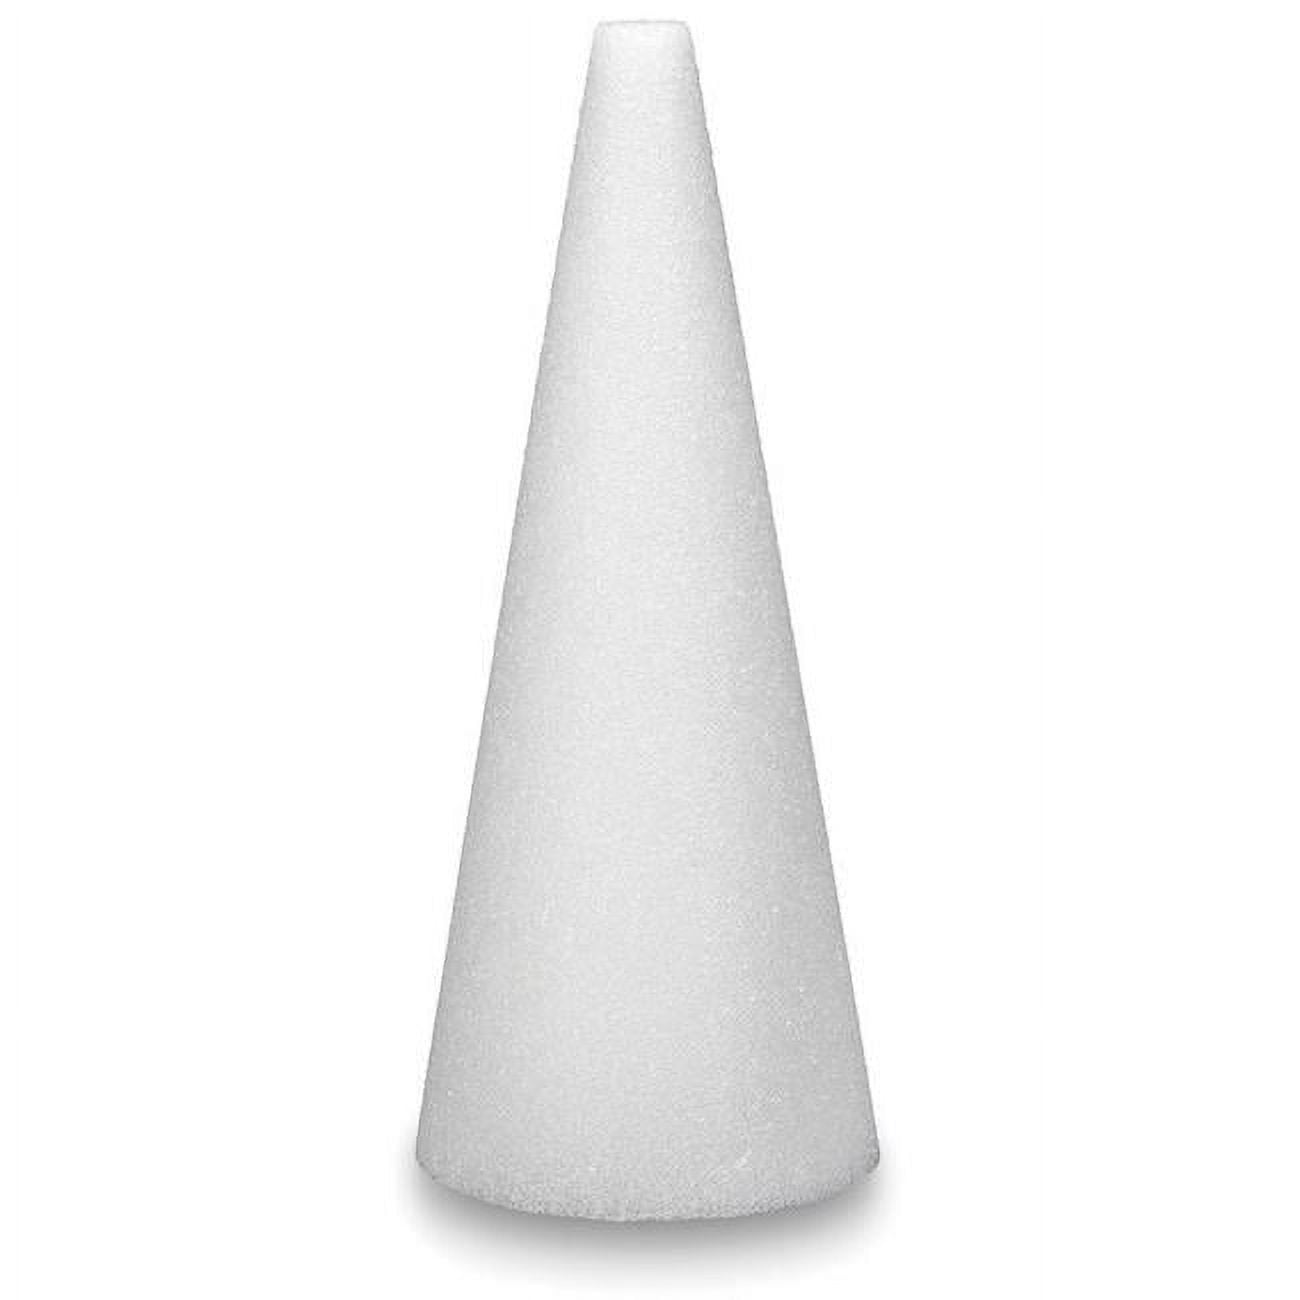 96 Wholesale 2 Piece Craft Foam Cone White Styrofoam 5.6x3.5 Inches - at 